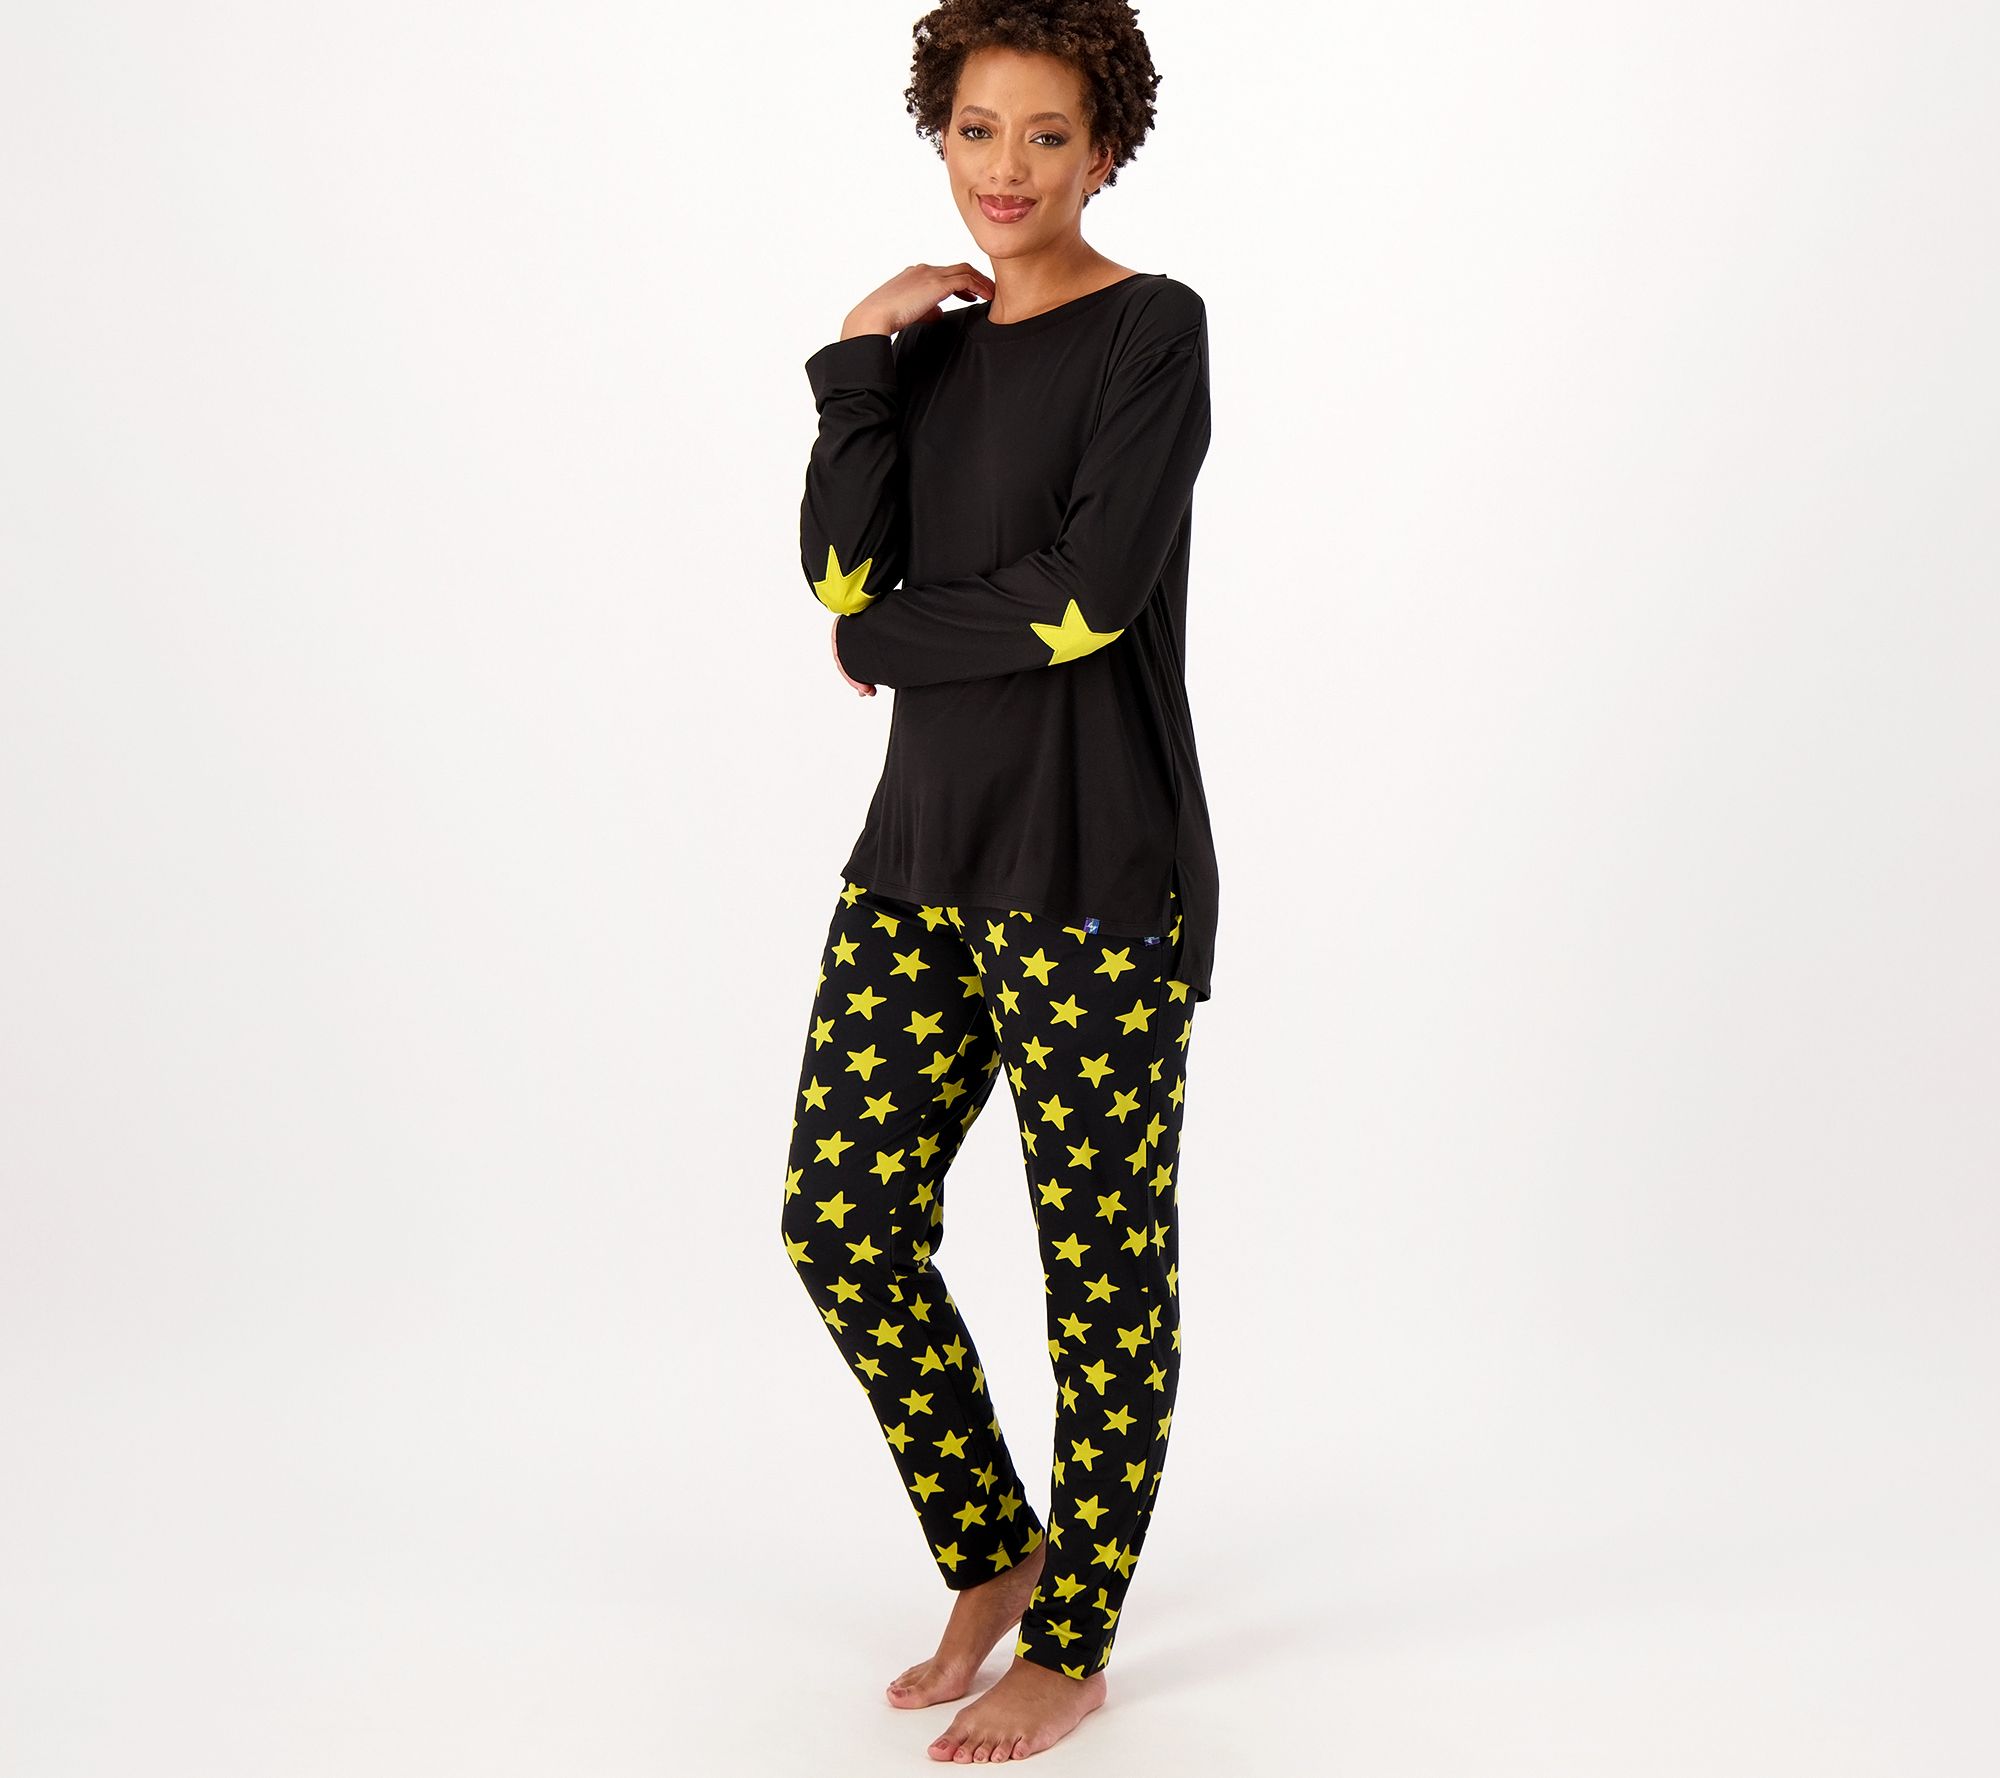 Juicy Couture Womens Plush Black Pajamas Shorts Pants Top Sleep Mask Set  X-Large